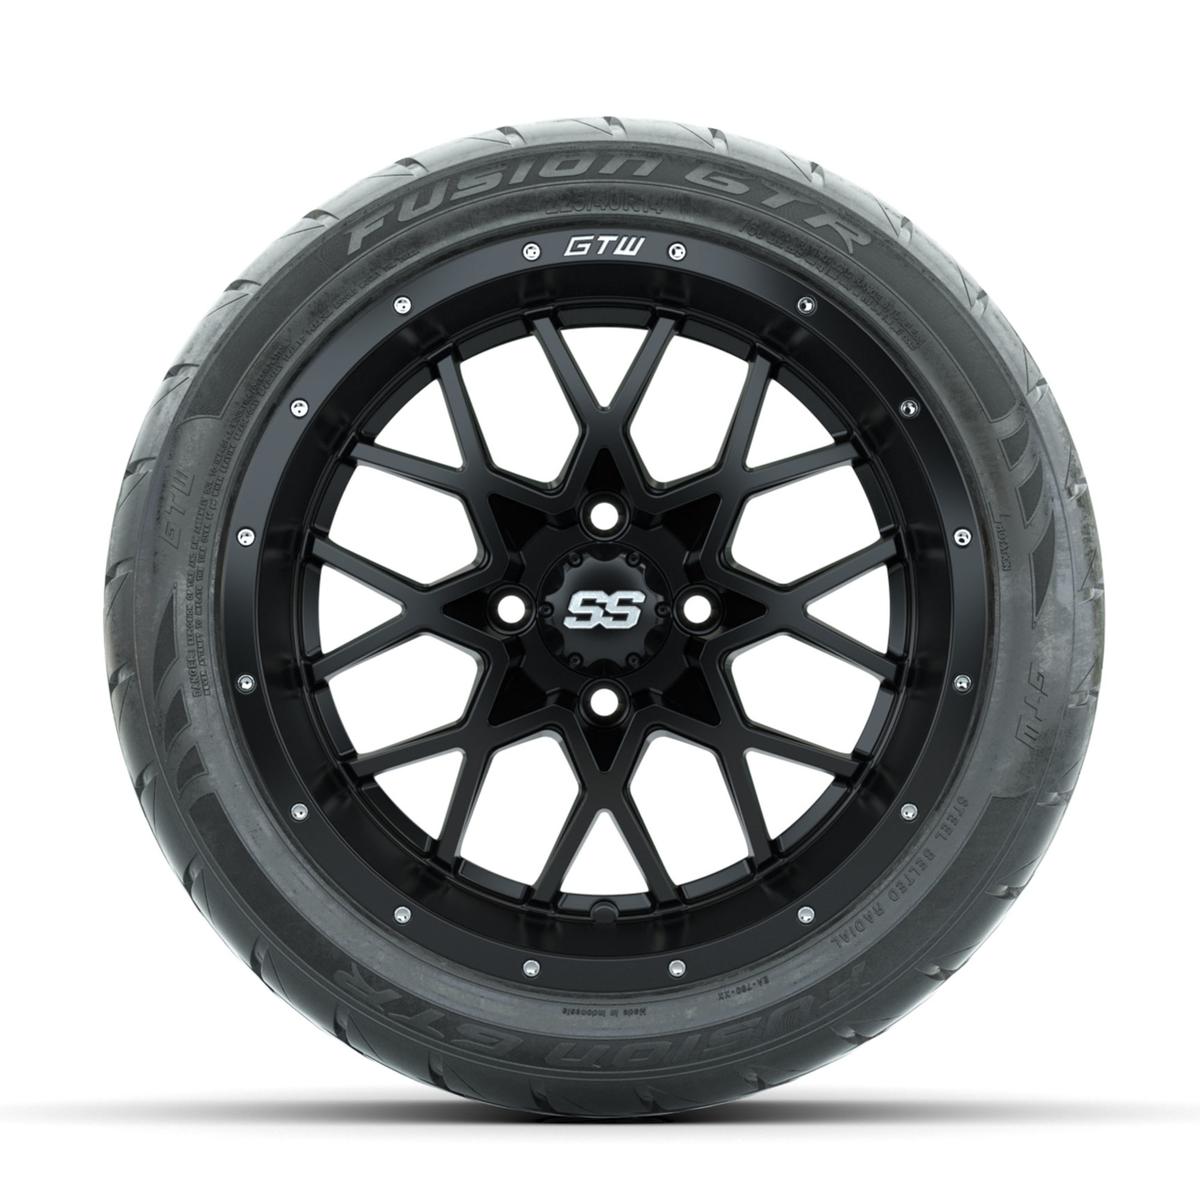 GTW Vortex Matte Black 14 in Wheels with 225/40-R14 Fusion GTR Street Tires – Full Set